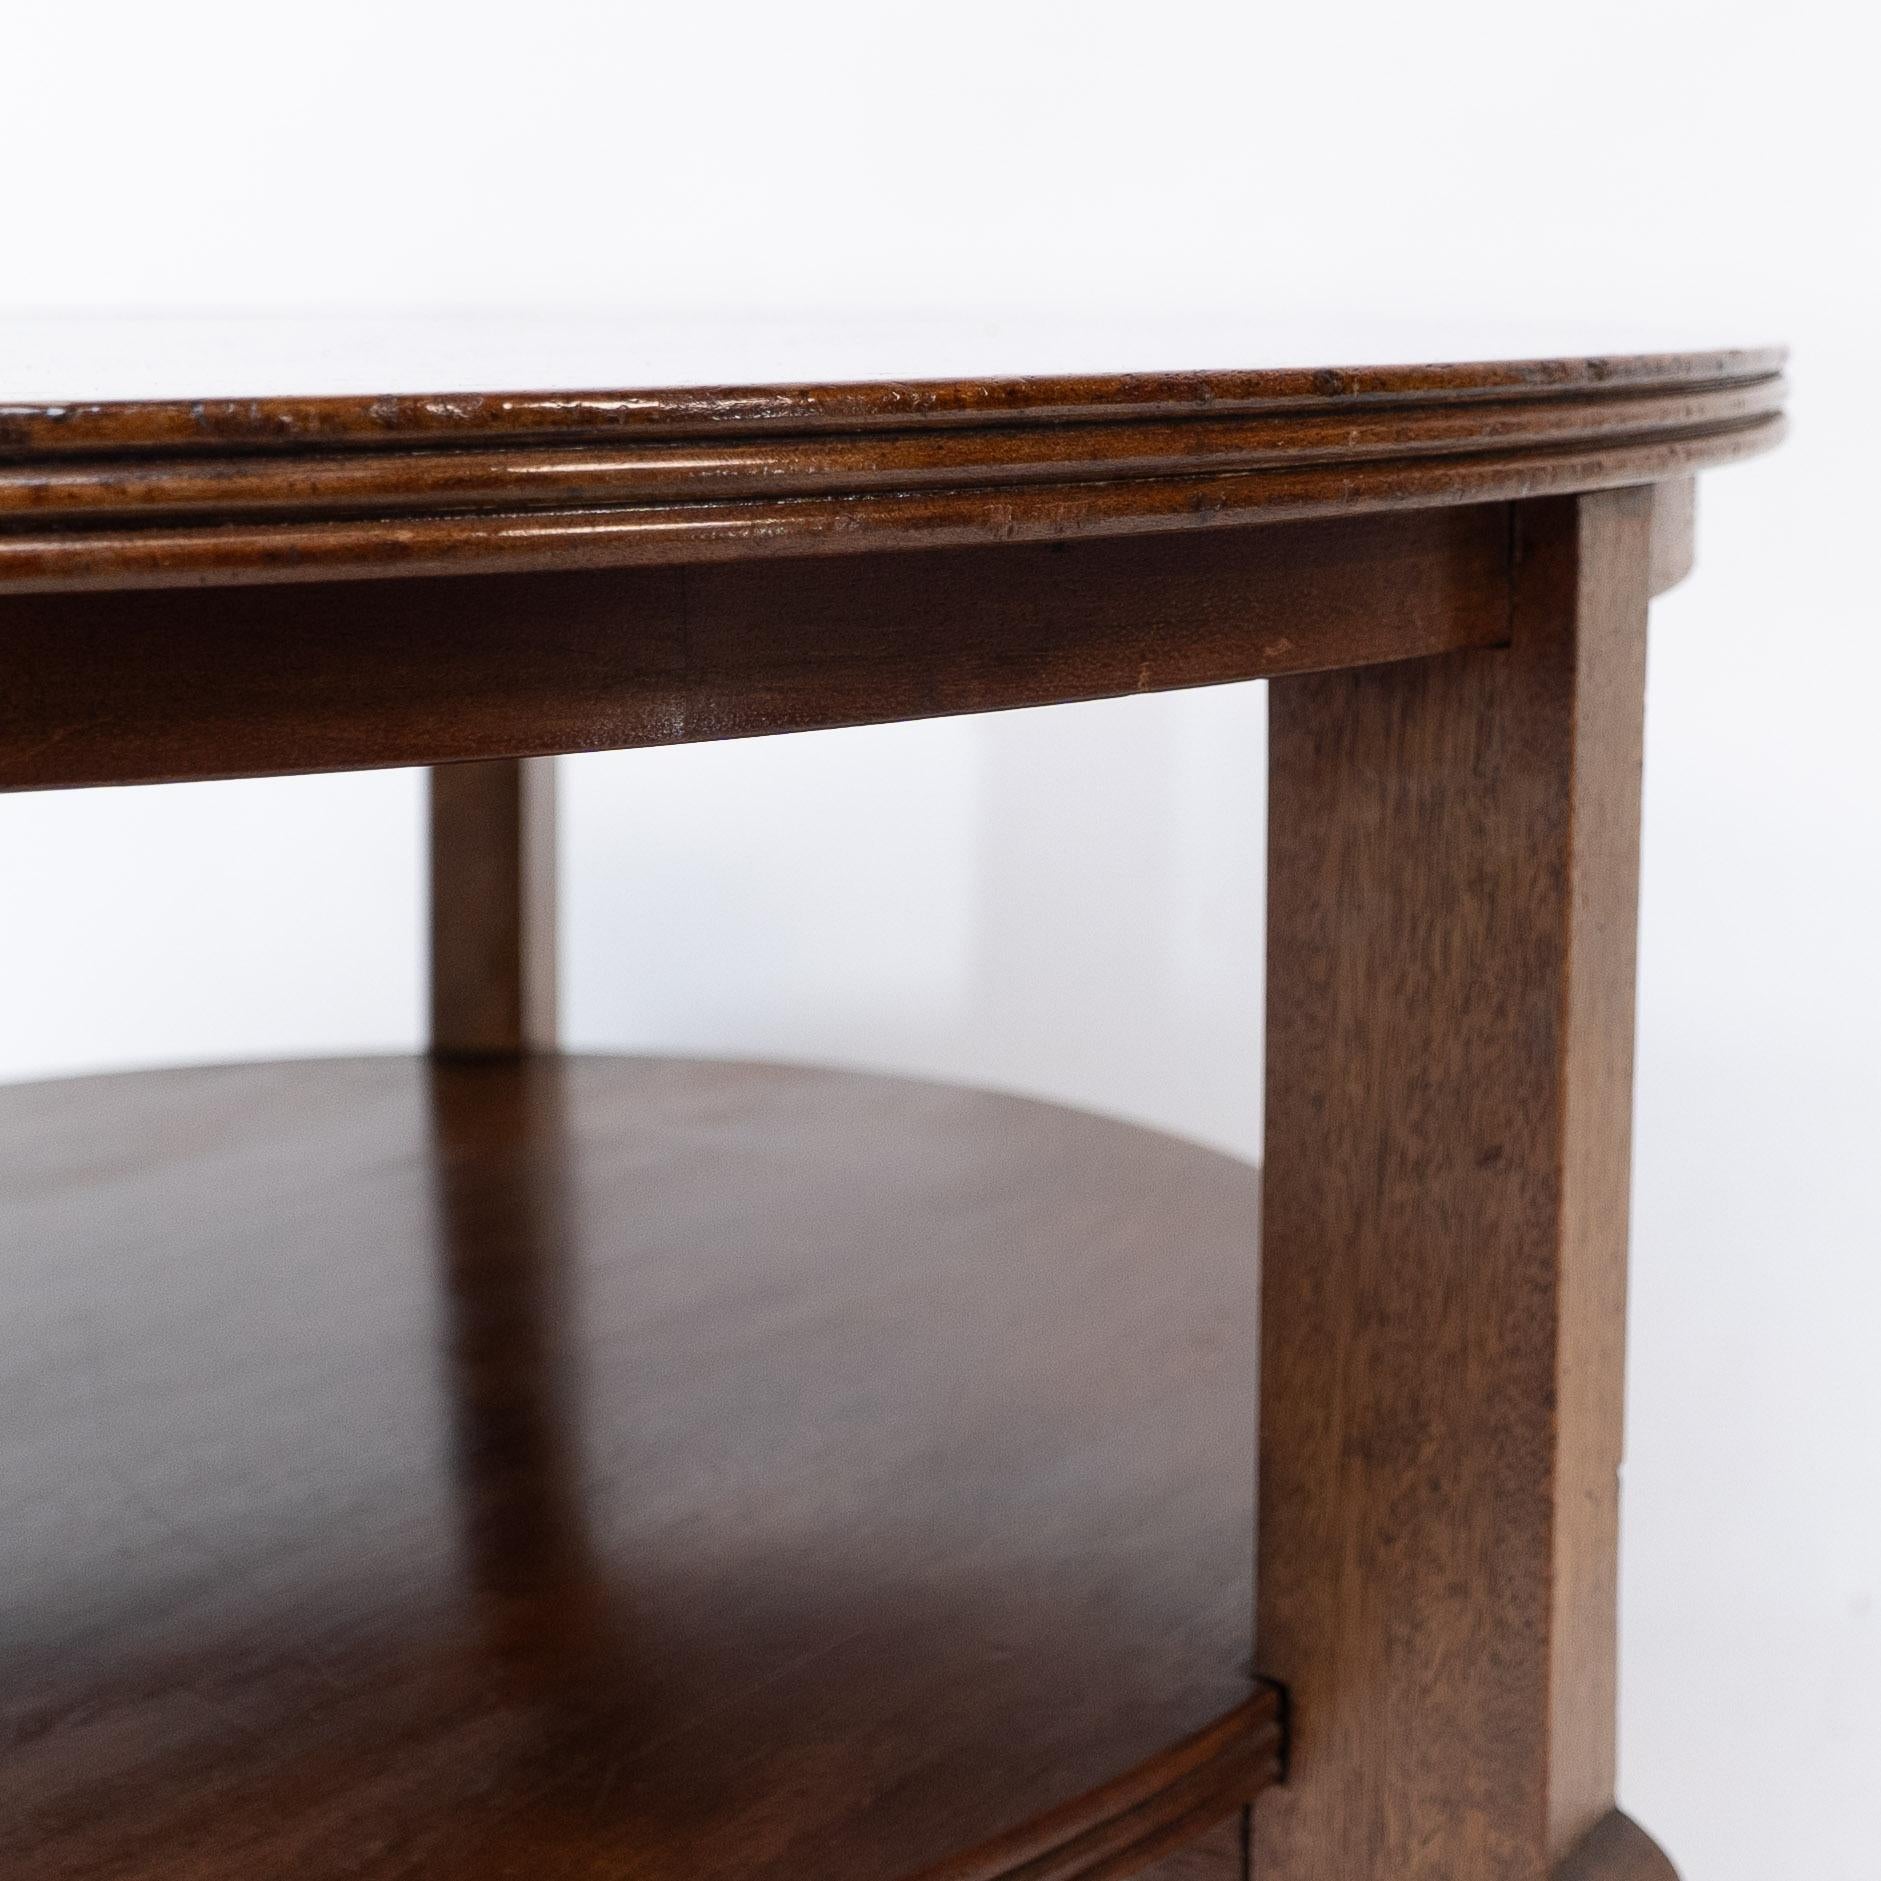 Gordon Russell. A gunstock figured walnut coffee table on gunstock shaped legs For Sale 3